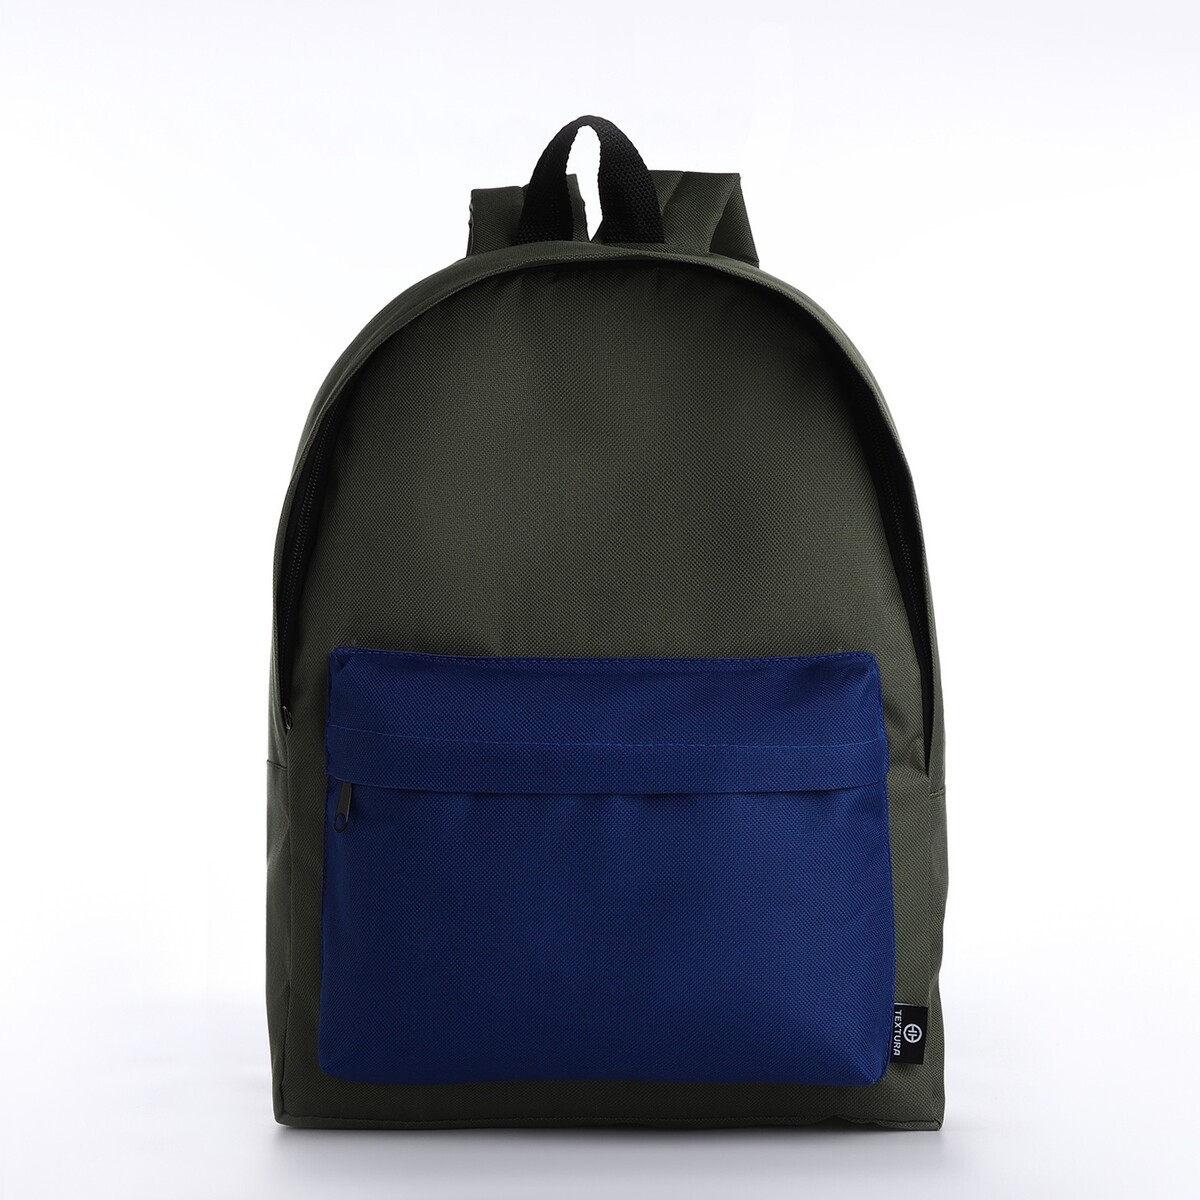 Спортивный рюкзак из текстиля на молнии textura, 20 литров, цвет хаки/синий